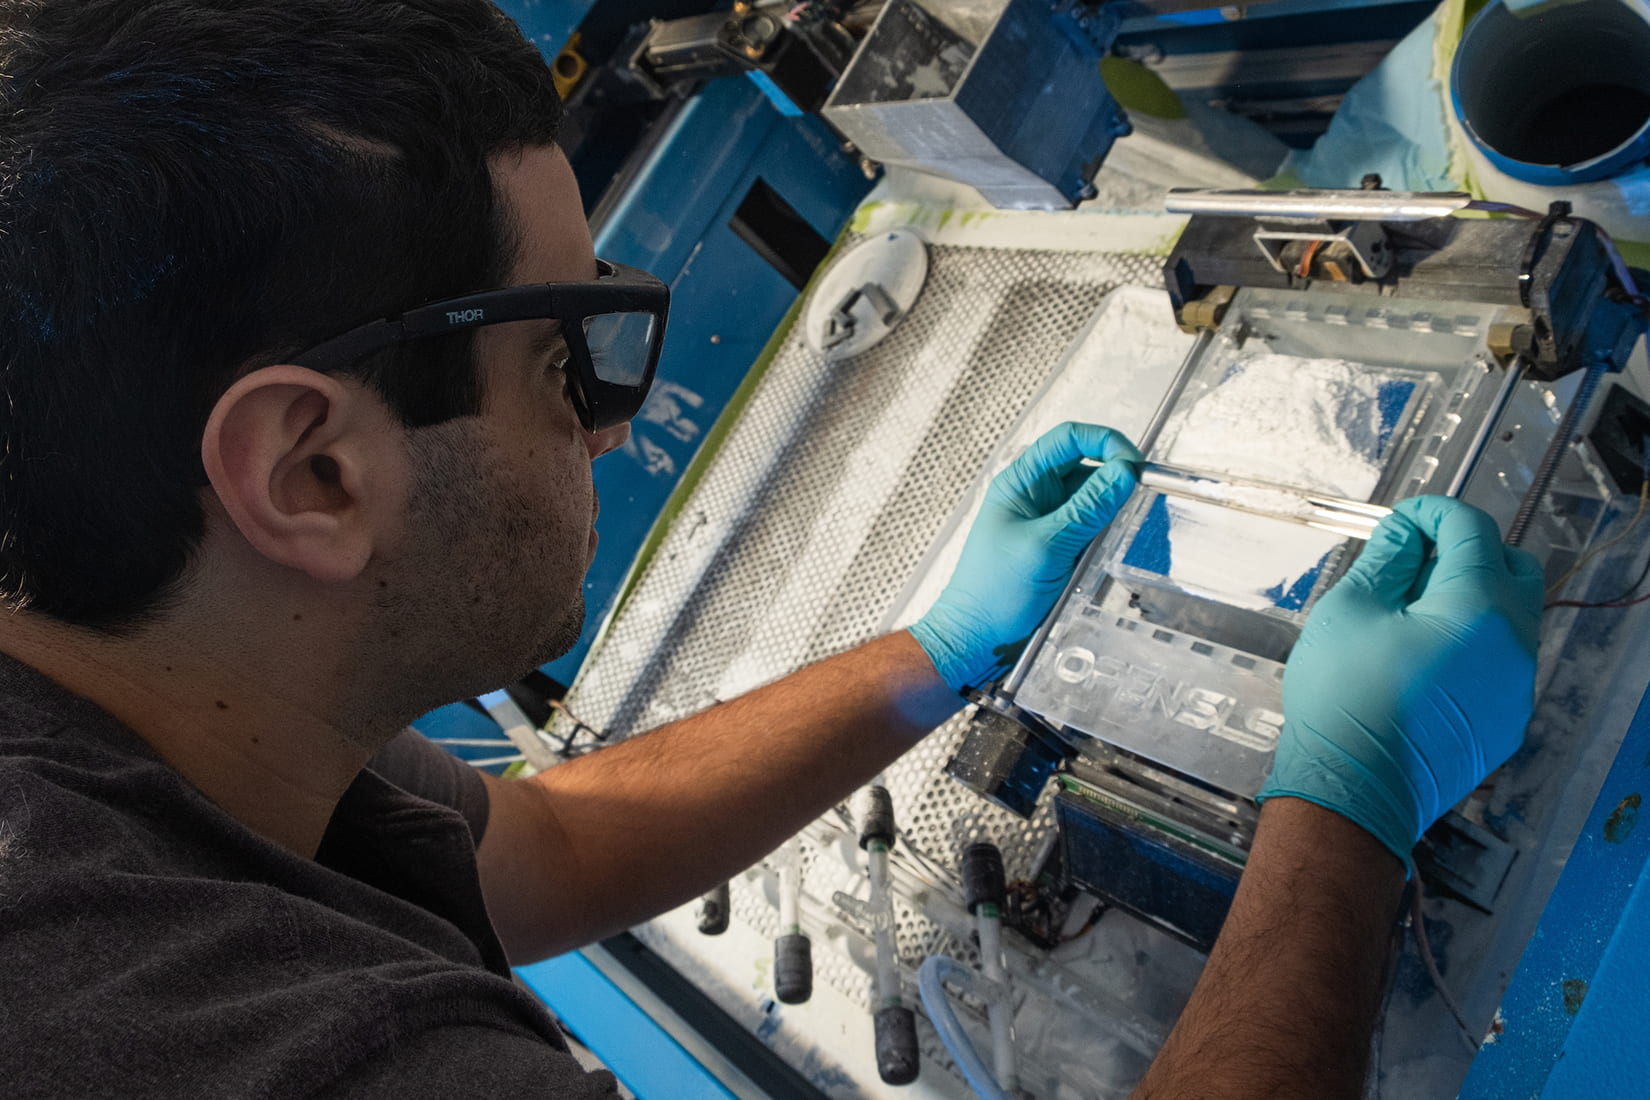 Graduate student Ian Kinstlinger preparing the selective laser sintering system in the Miller bioengineering lab at Rice University (pictured). Photo via Rice University.